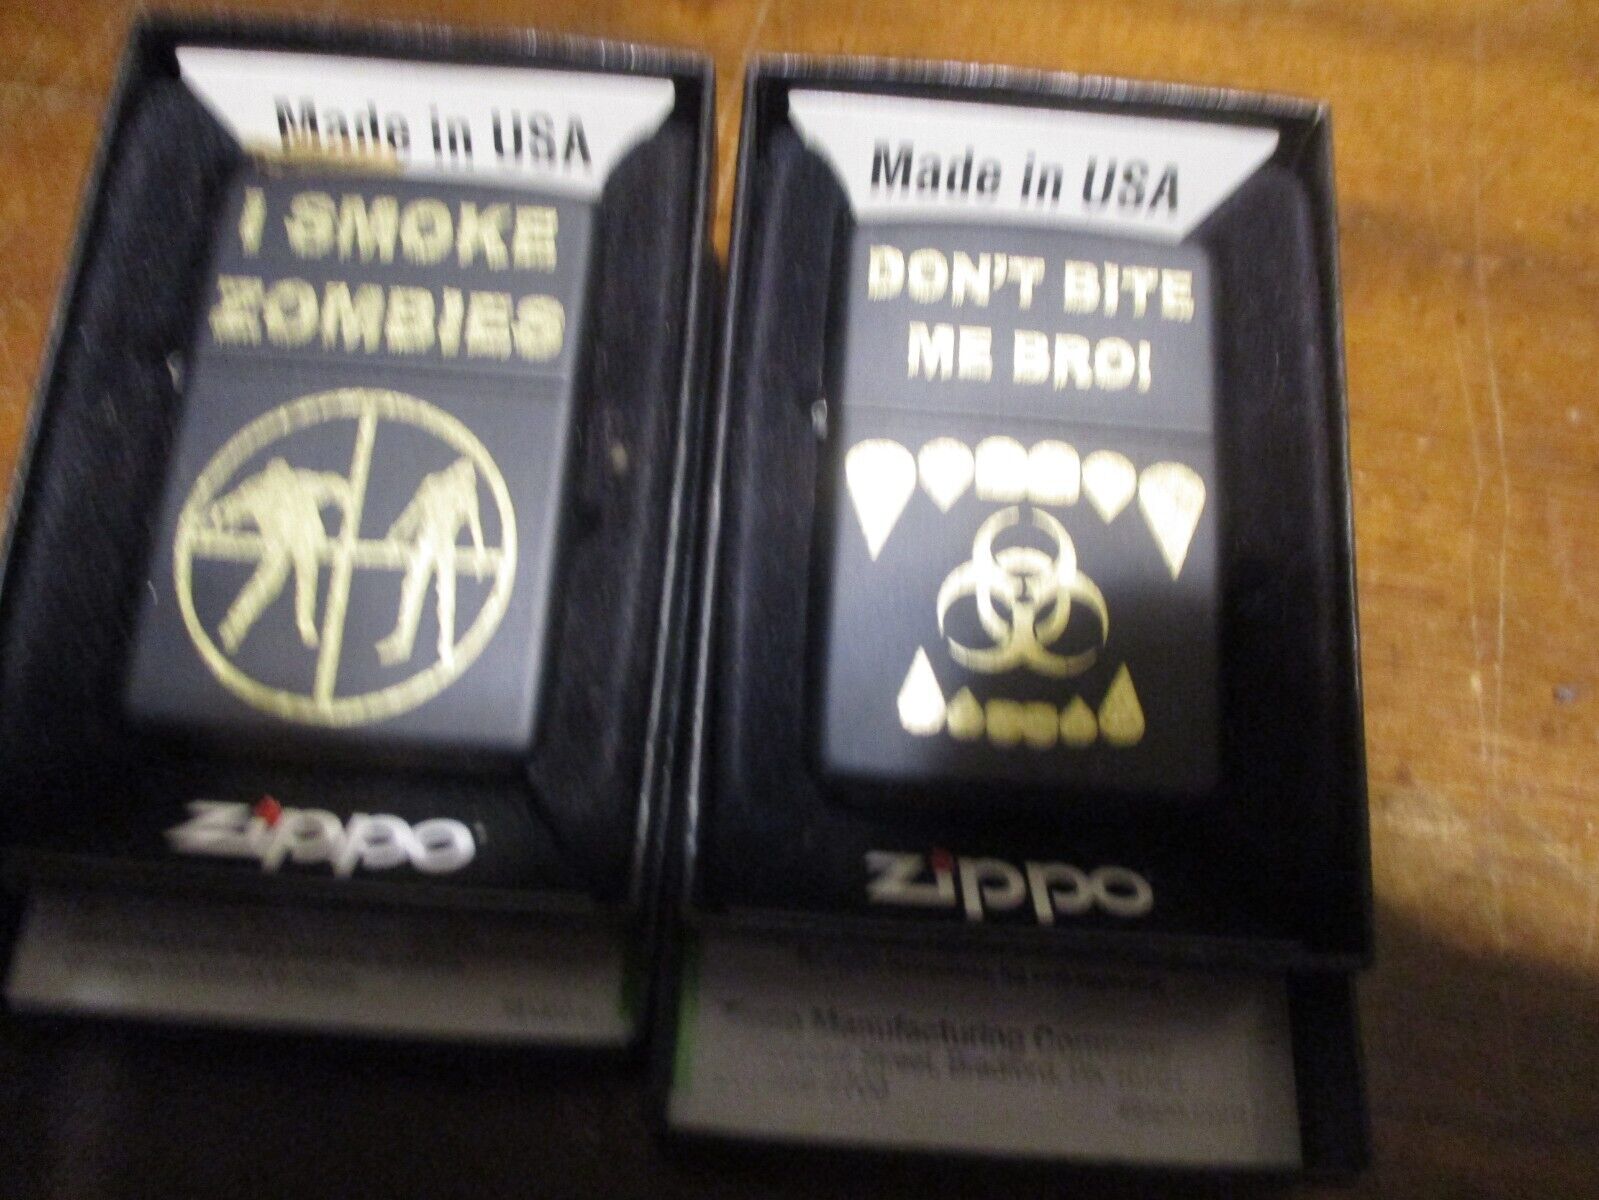 2 new zippo lighters